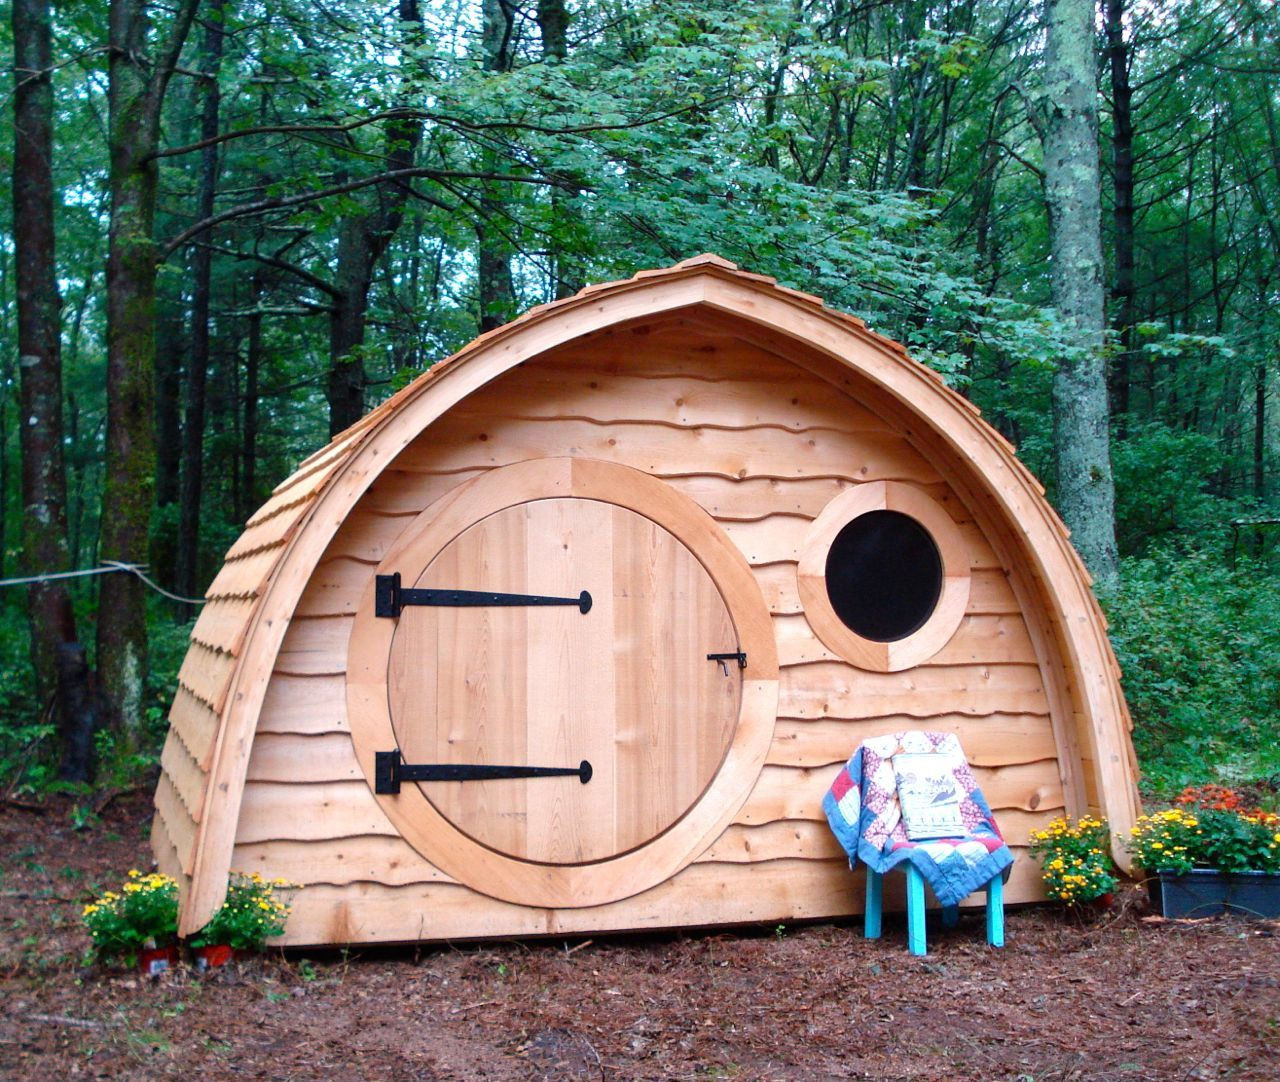 Backyard Playhouse Kits
 Hobbit Hole Playhouse Kit outdoor wooden kids playhouse